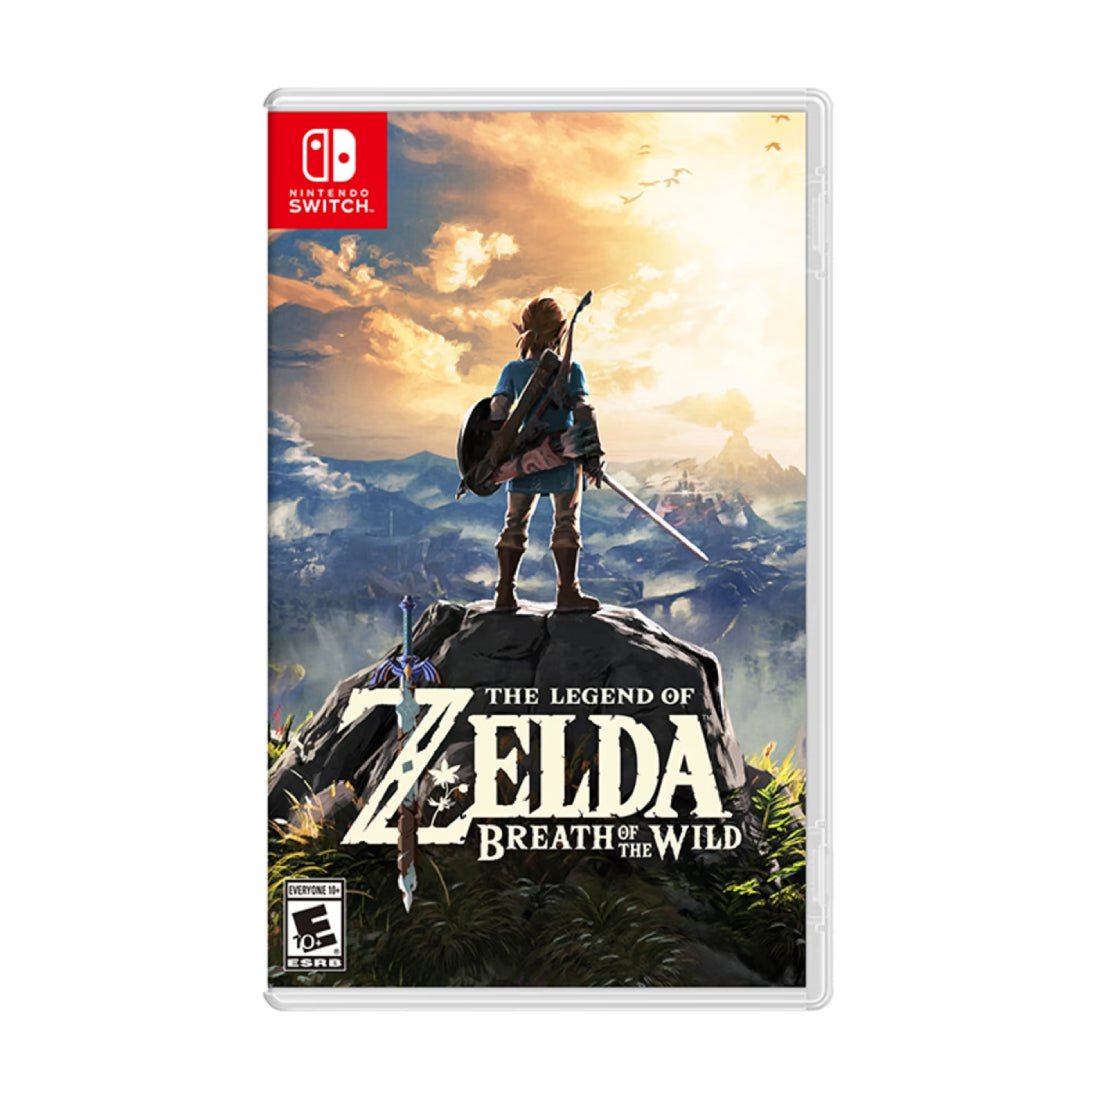 The Legend of Zelda: Breath of the Wild - Nintendo Switch - Store 974 | ستور ٩٧٤